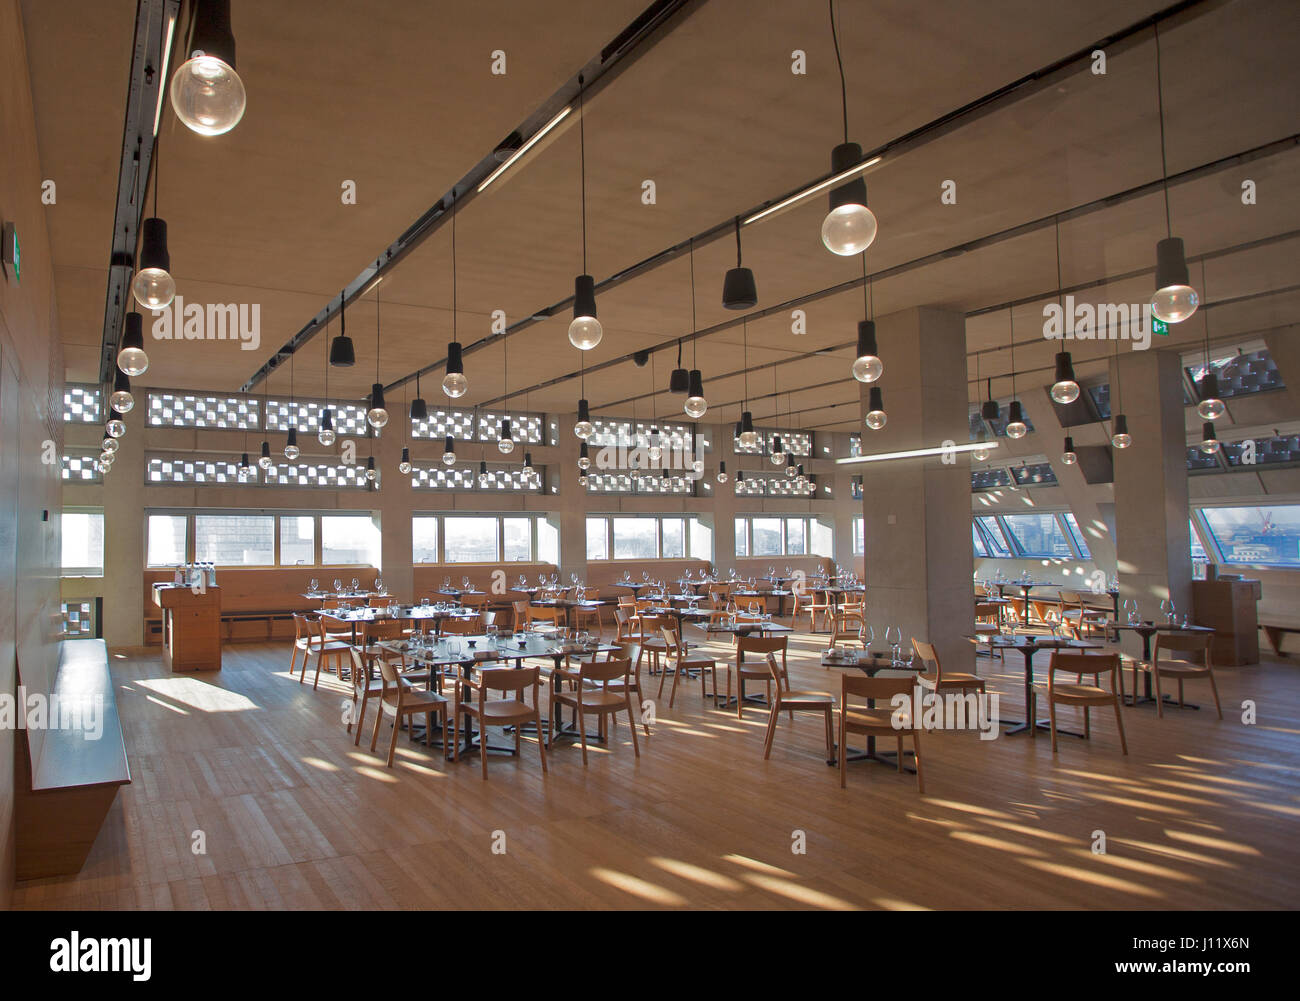 Tate Modern Switch House Restaurant taken in daylight with no customers  present, United Kingdom, London Stock Photo - Alamy